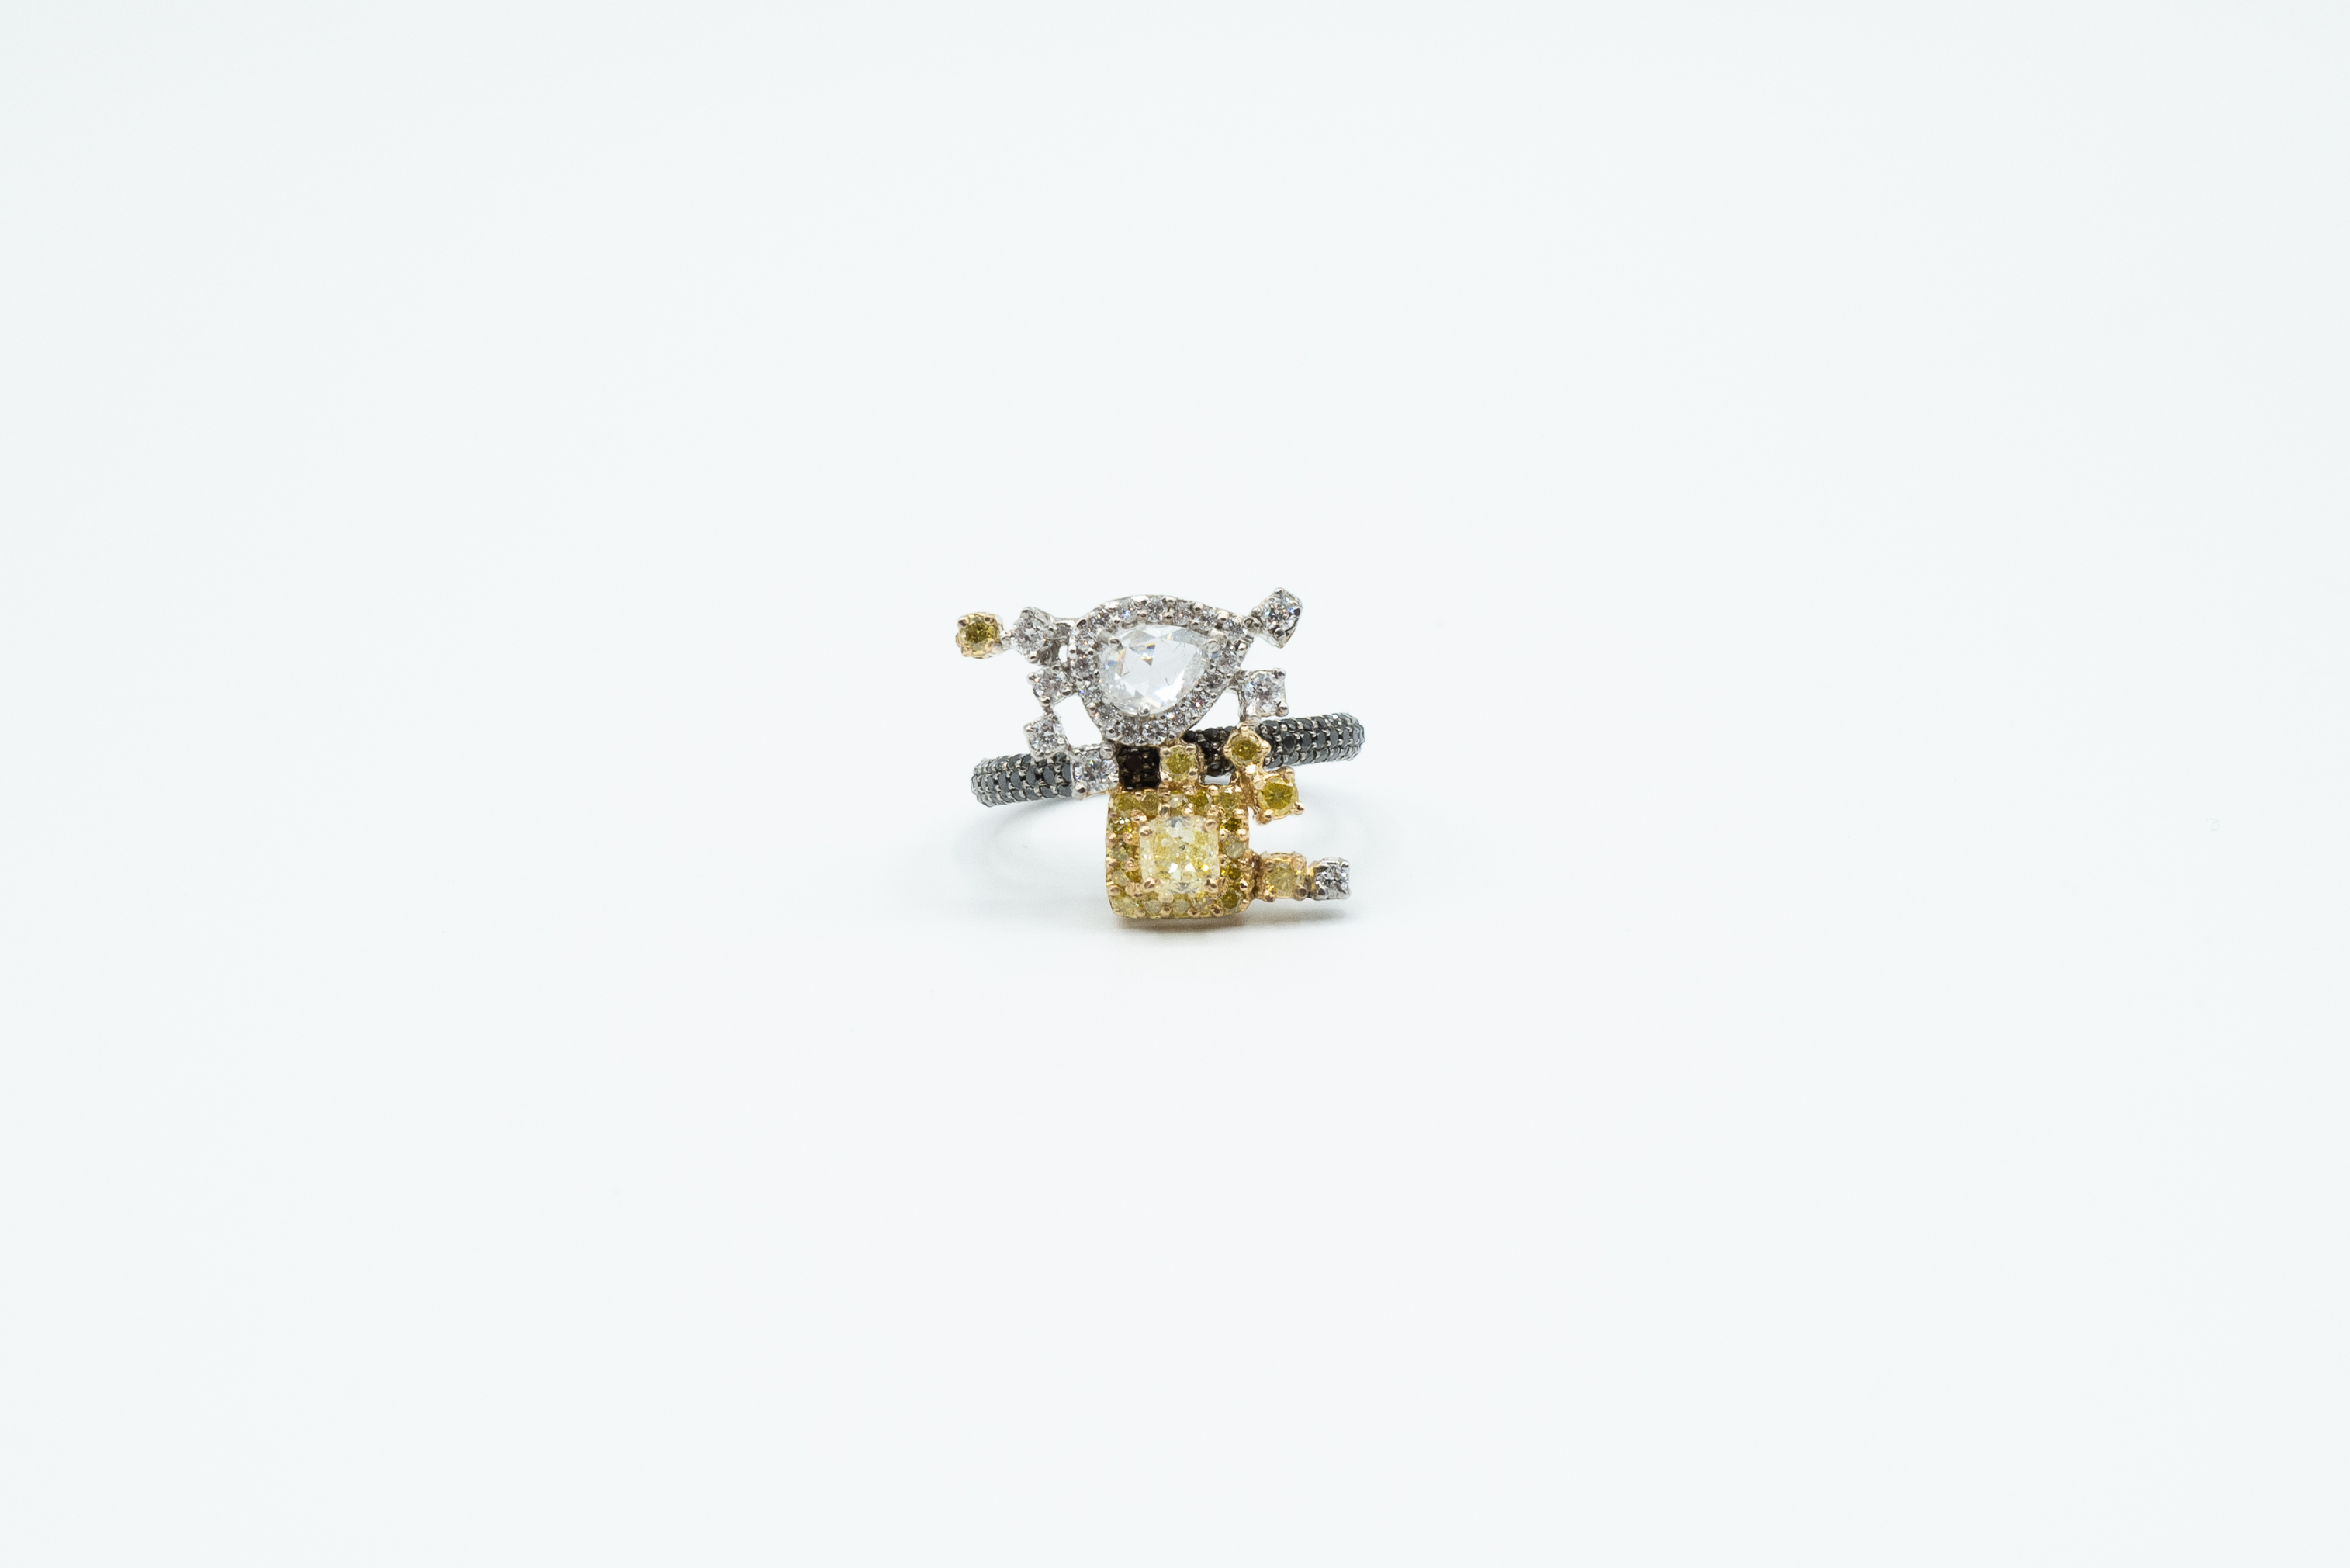 MAB 21-0056 Hand-Fabricated 18k Gold and Diamond Ring